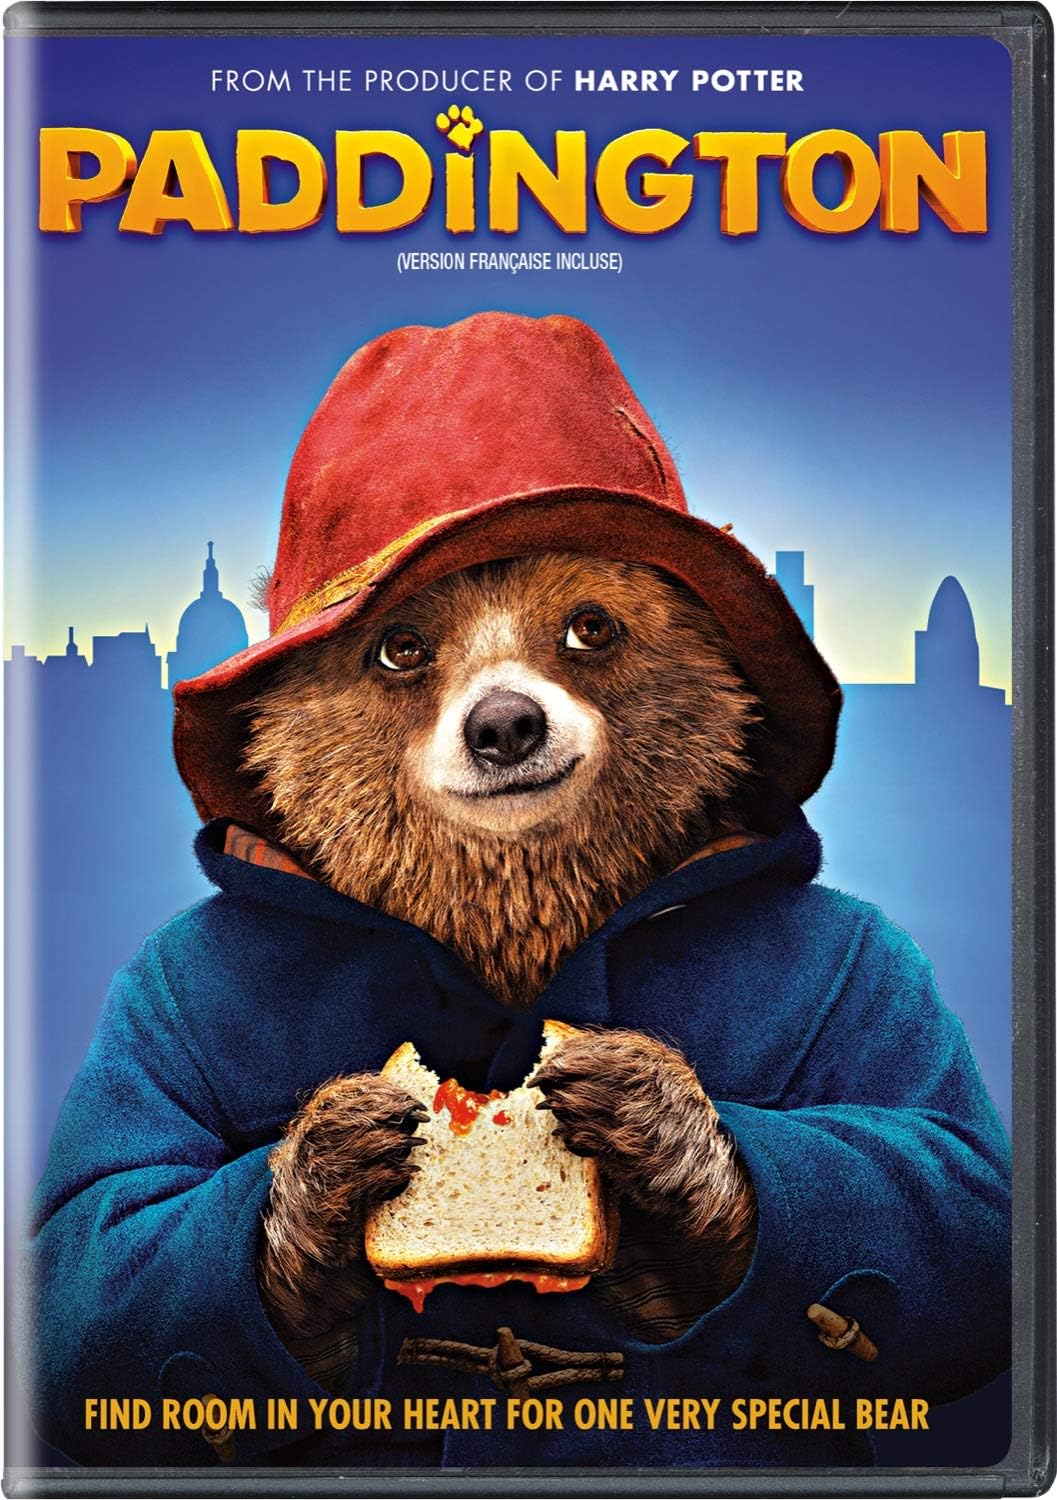 Paddington [DVD]